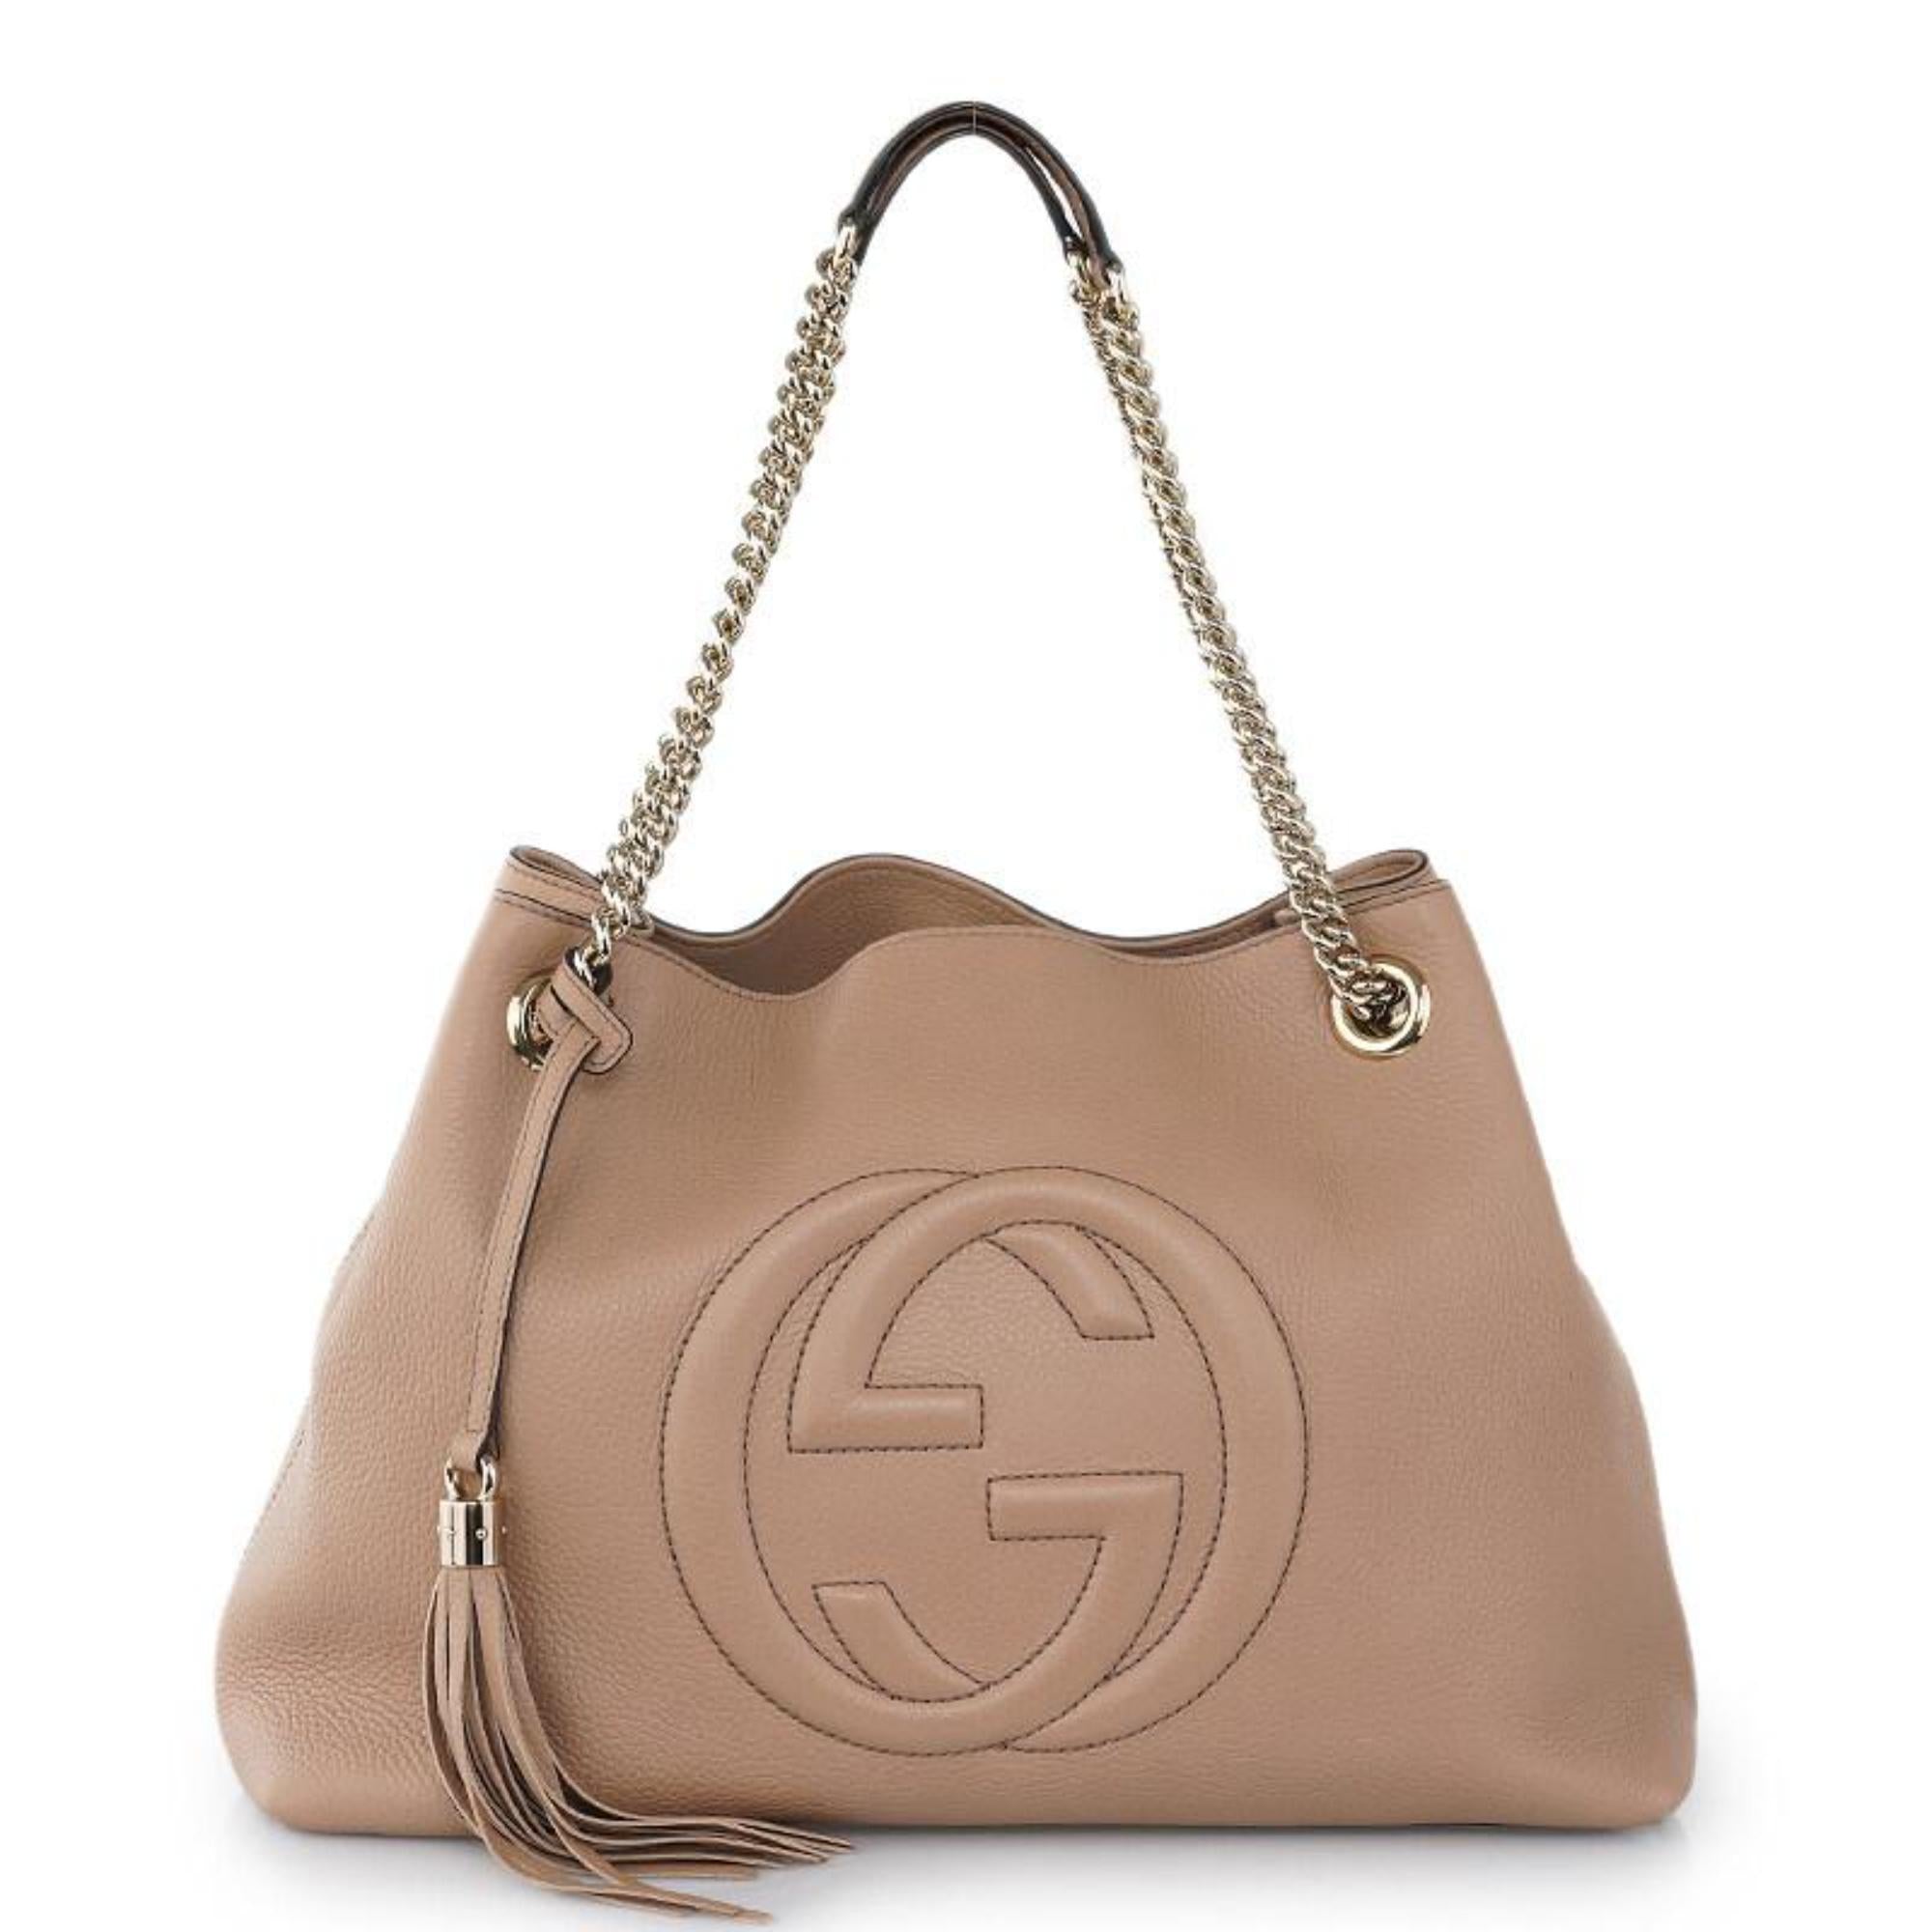 Gucci | Bags | Authentic 3 Piece Gucci Set Gg Logo | Poshmark